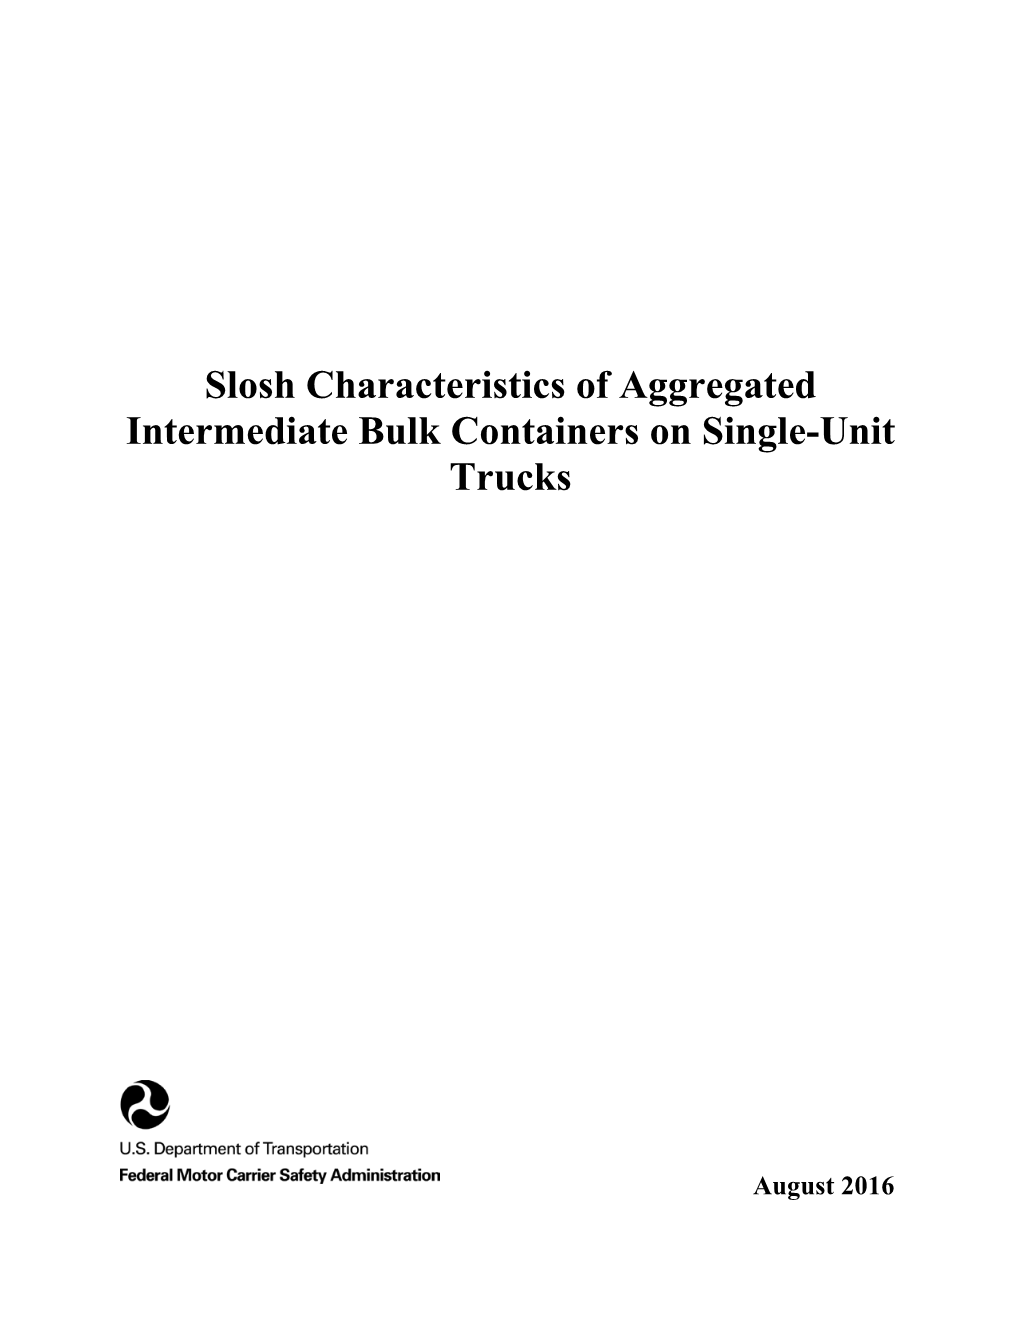 Slosh Characteristics of Aggregated Intermediate Bulk Containers on Single-Unit Trucks